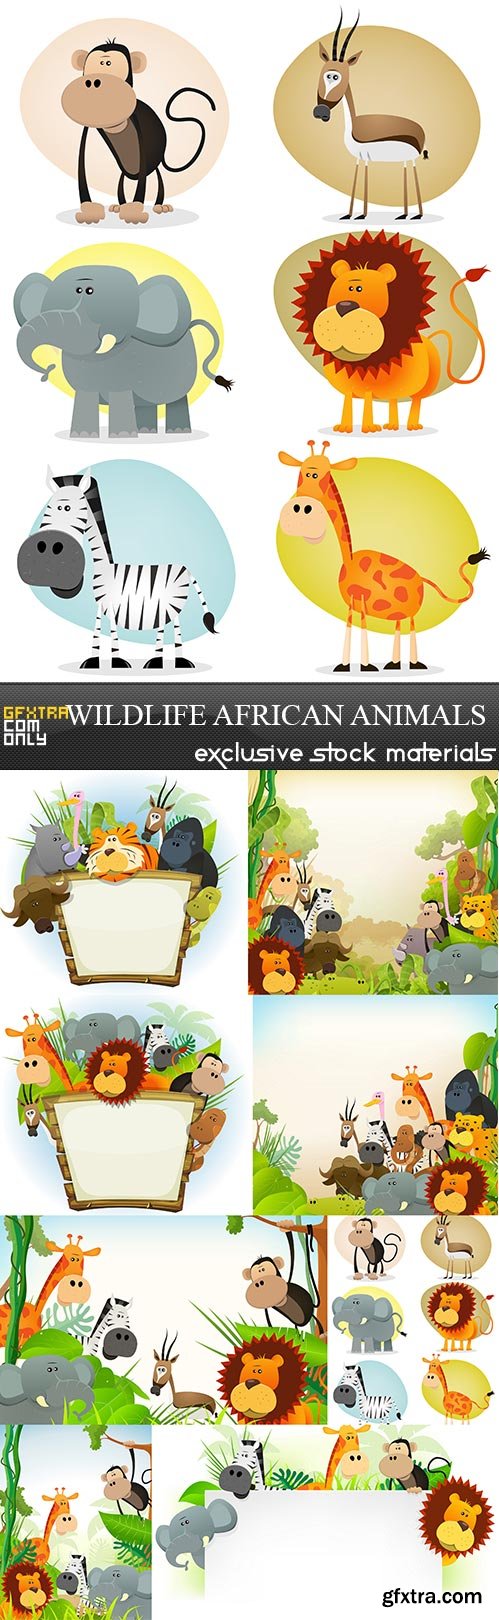 Wildlife African Animals, 8 x UHQ JPEG